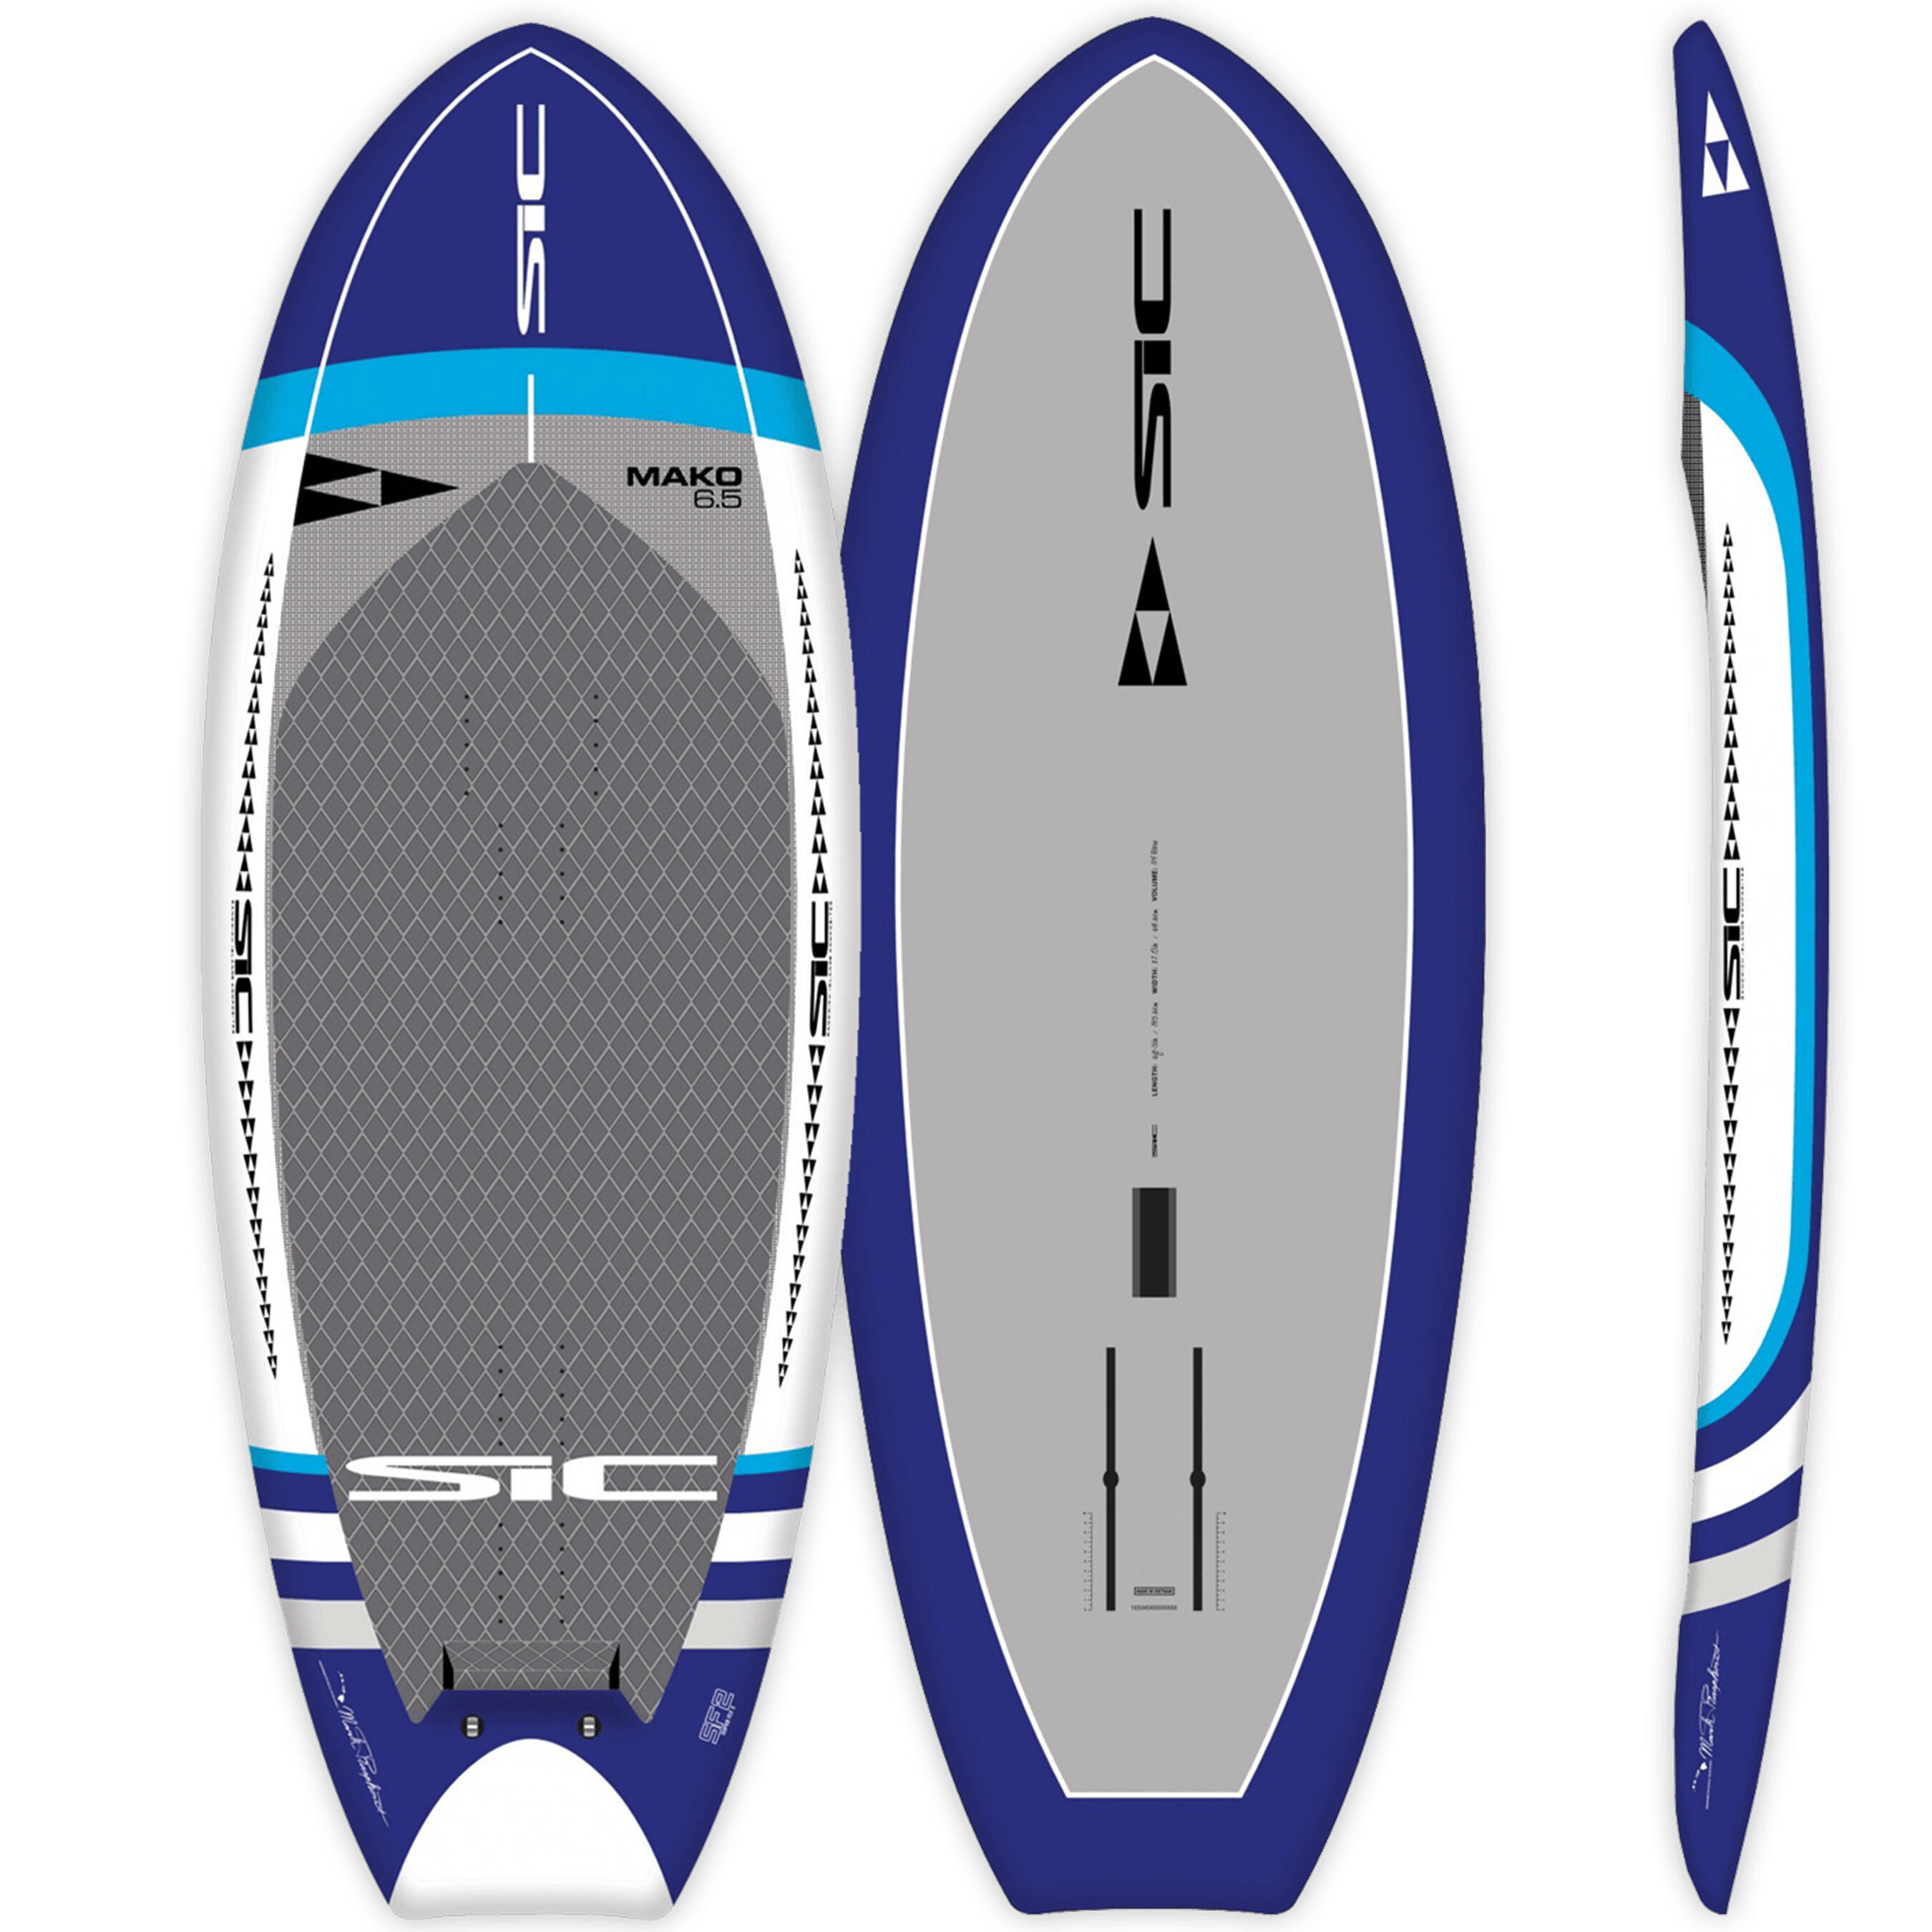 STAND UP PADDLE SURF WING FOIL SIC MAKO 6.5 x 27.0 La Oferta Online decathlon imagine La Oferta Online